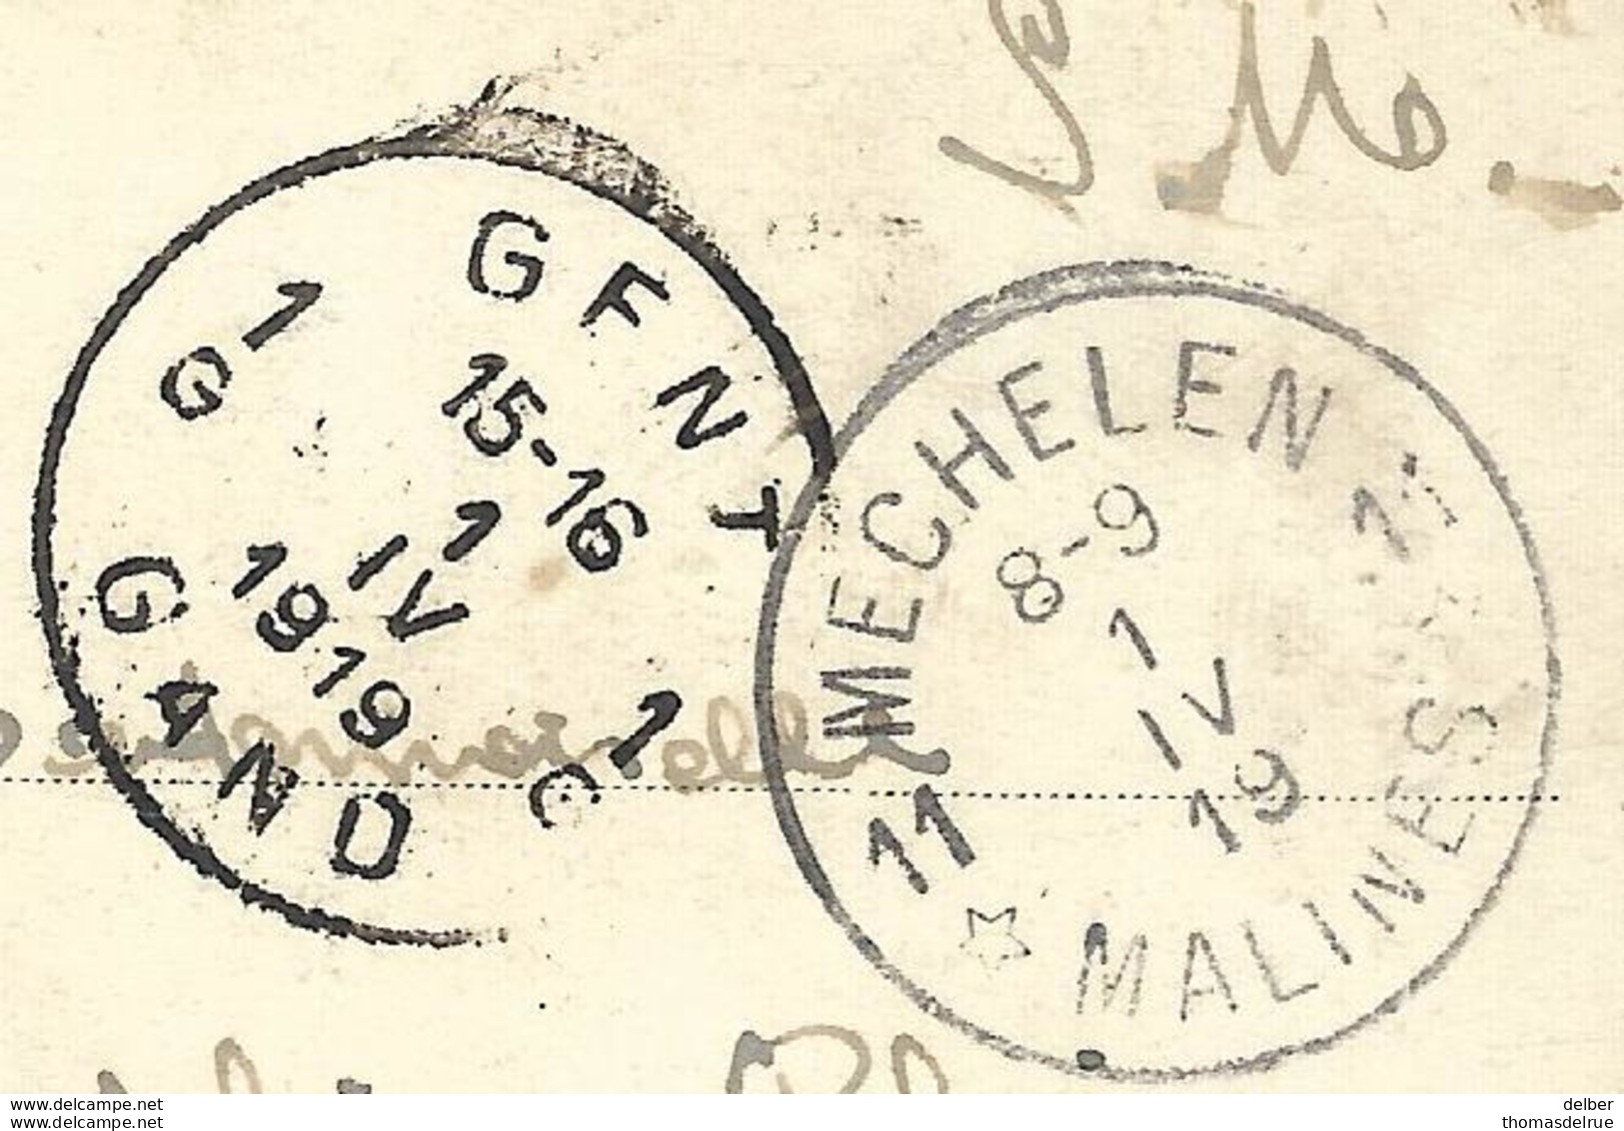 6ik-545: S.M. 11* MECHELEN 11* MALINES 8-9 1 IV 19 > Gand /pk Mechelen - Brusselse Poort... - Foruna (1919)